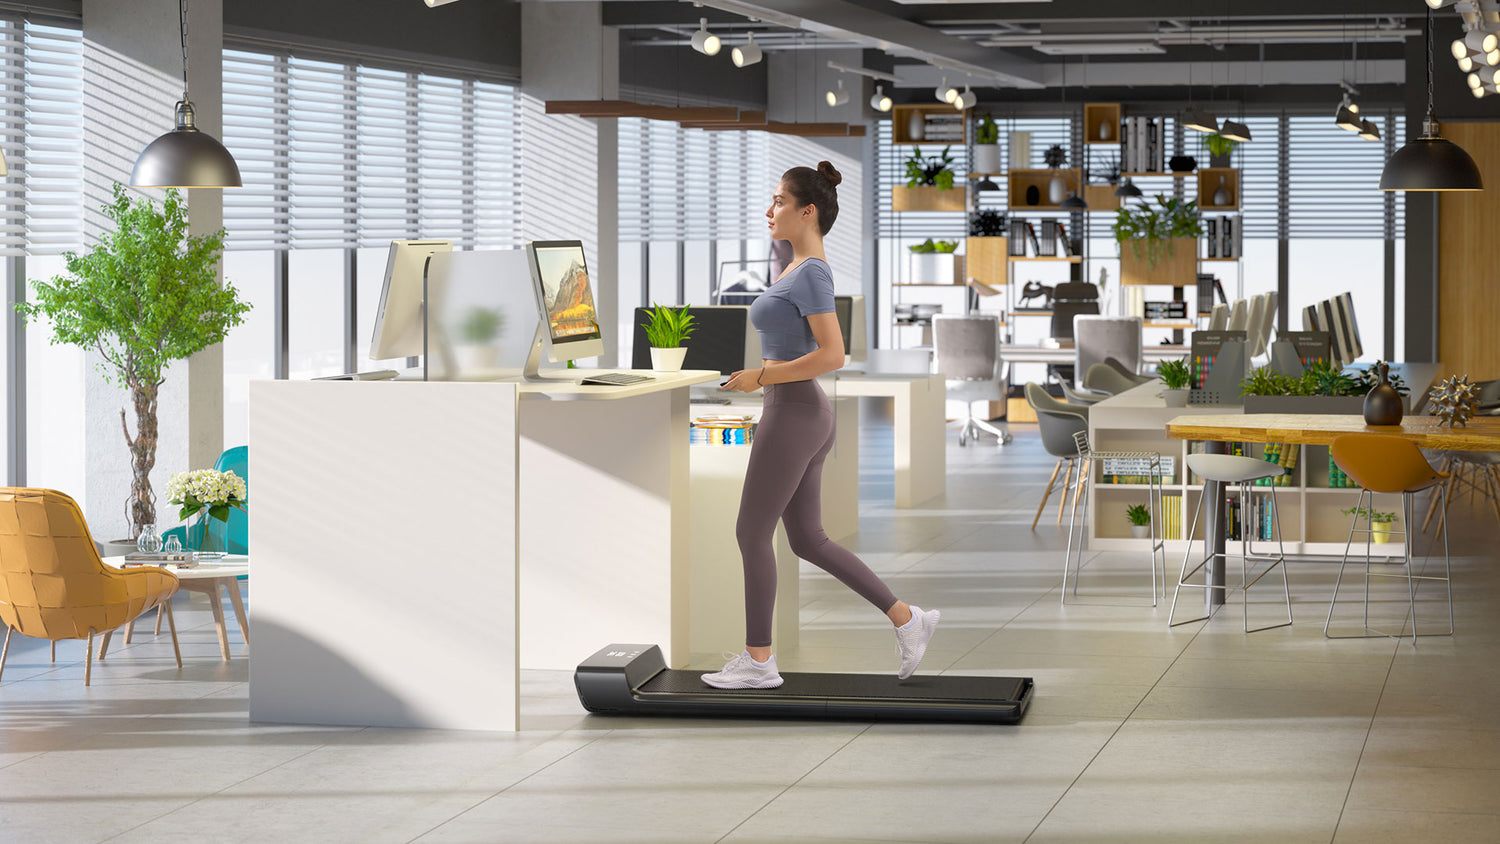 Using a WalkingPad Treadmill can customize workouts